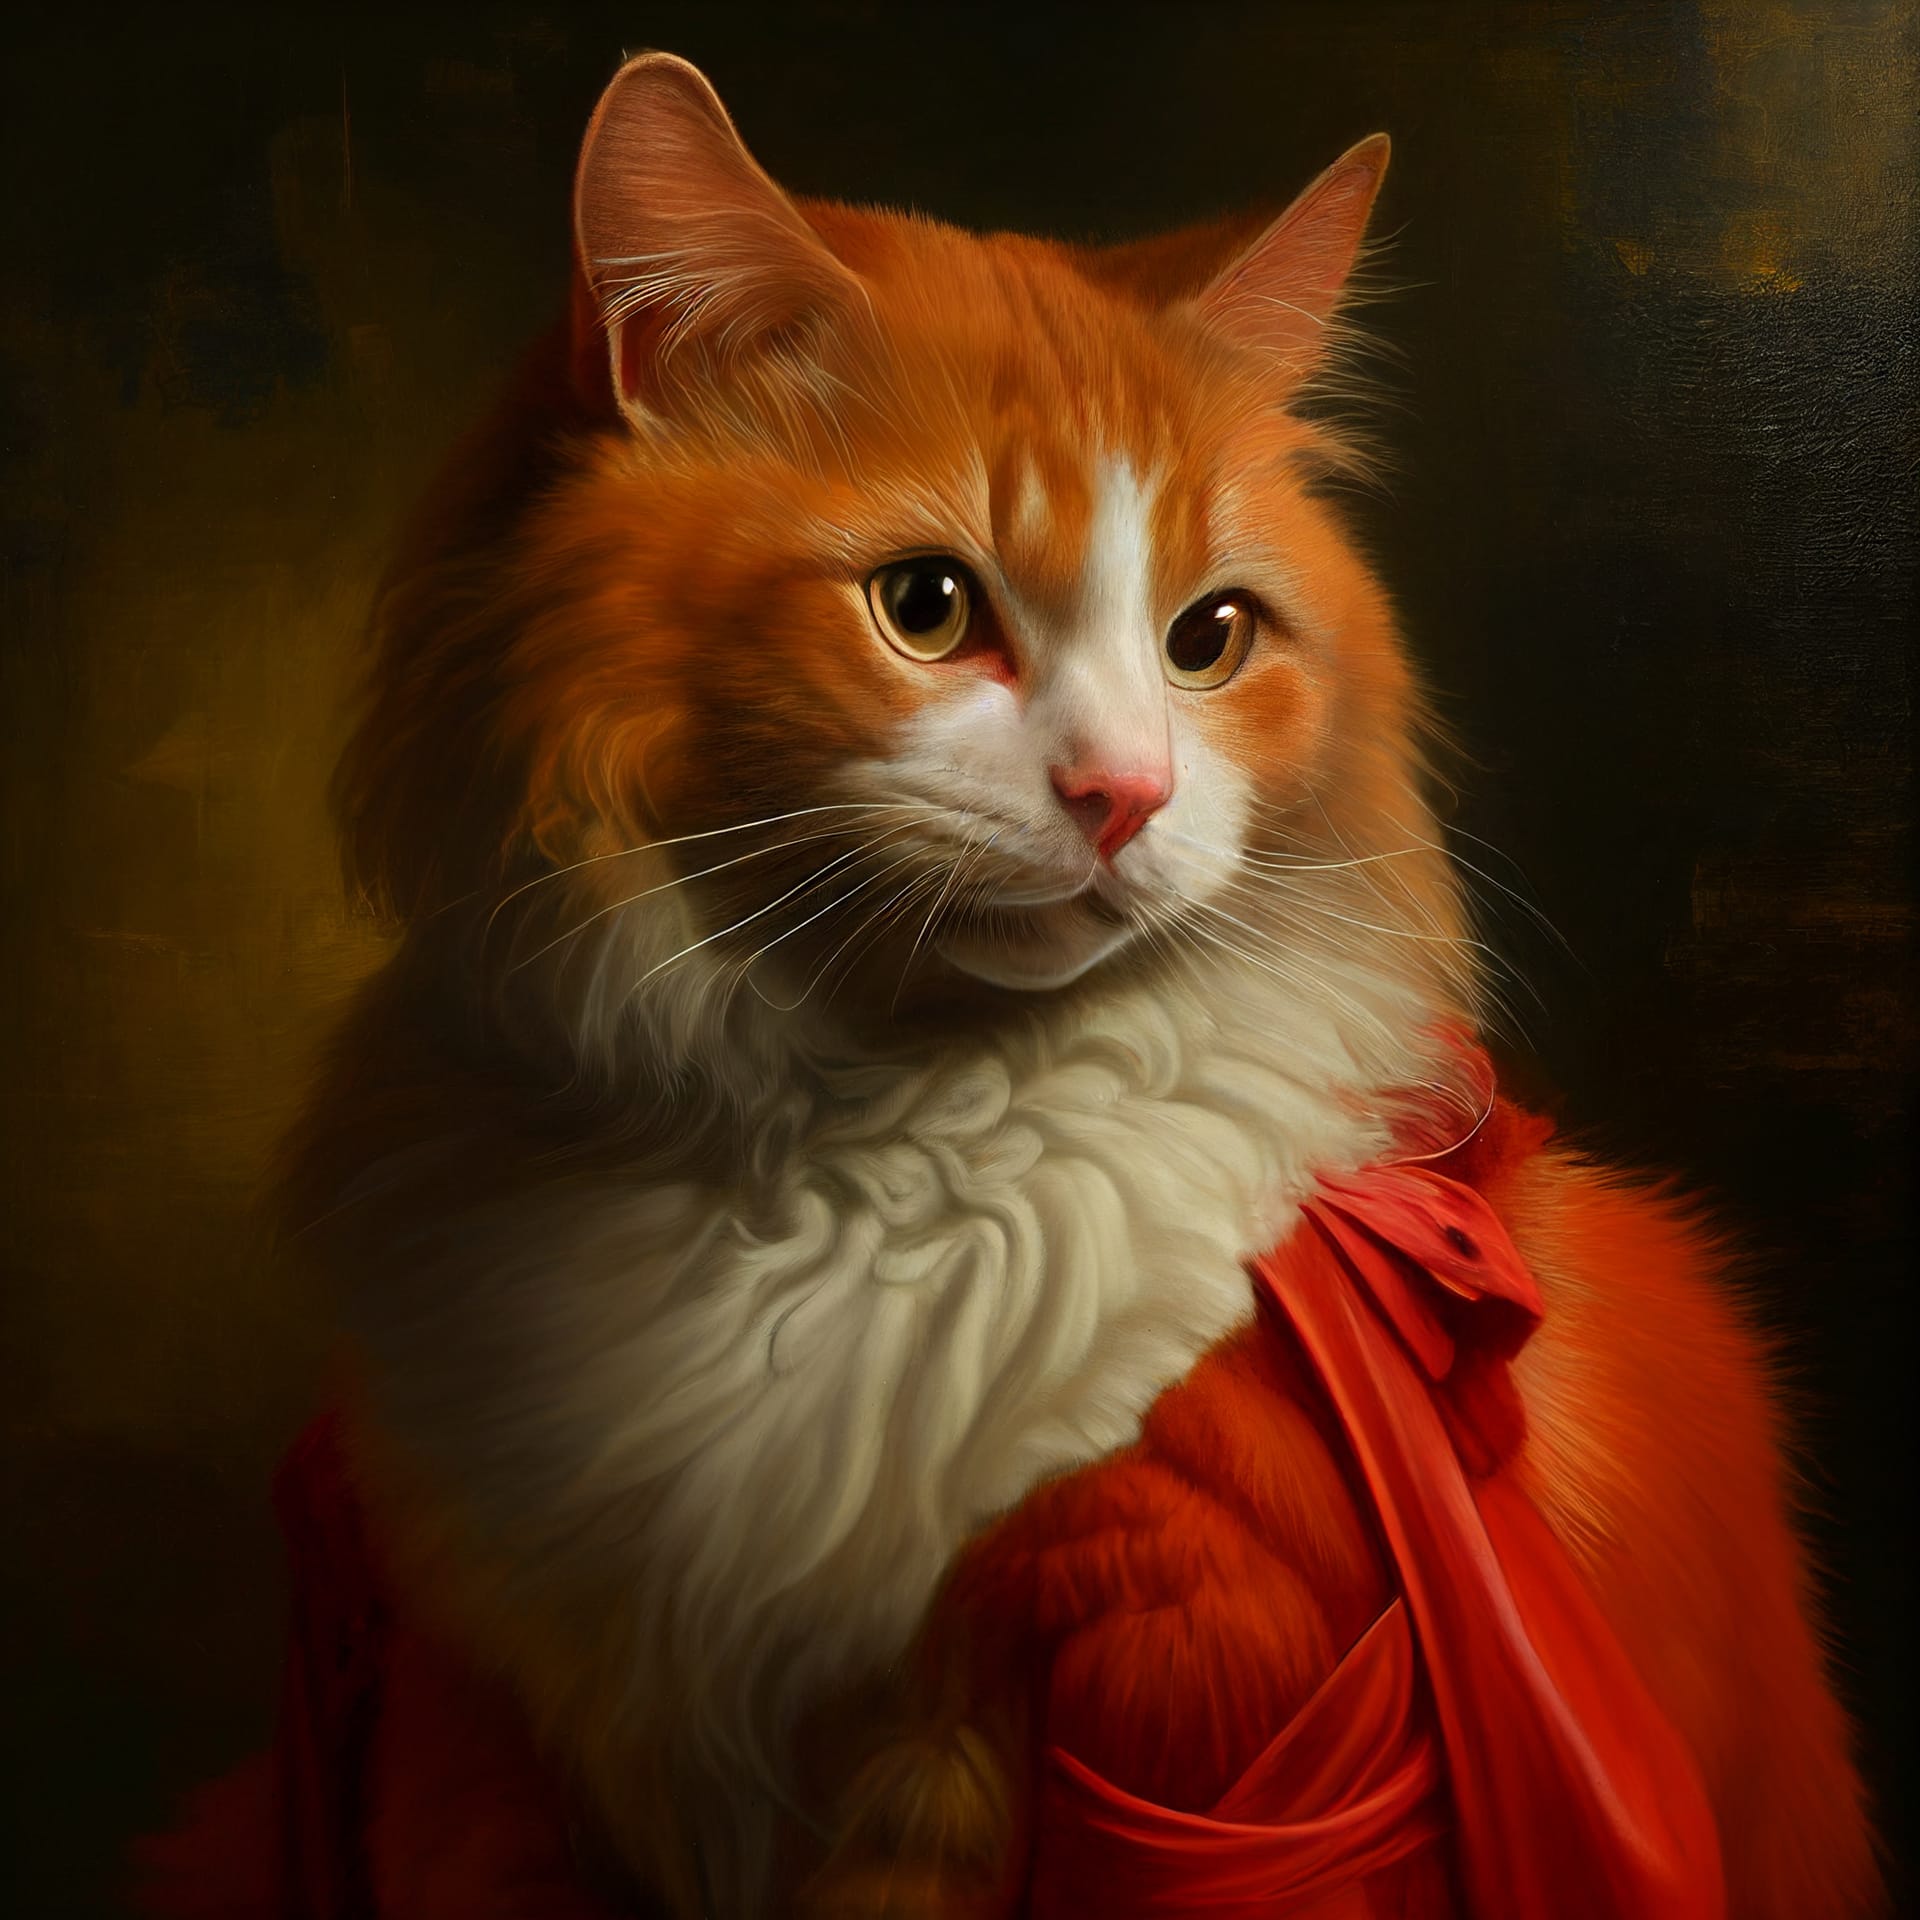 Medieval cat imitation van dyck proud cat red cloak illustration